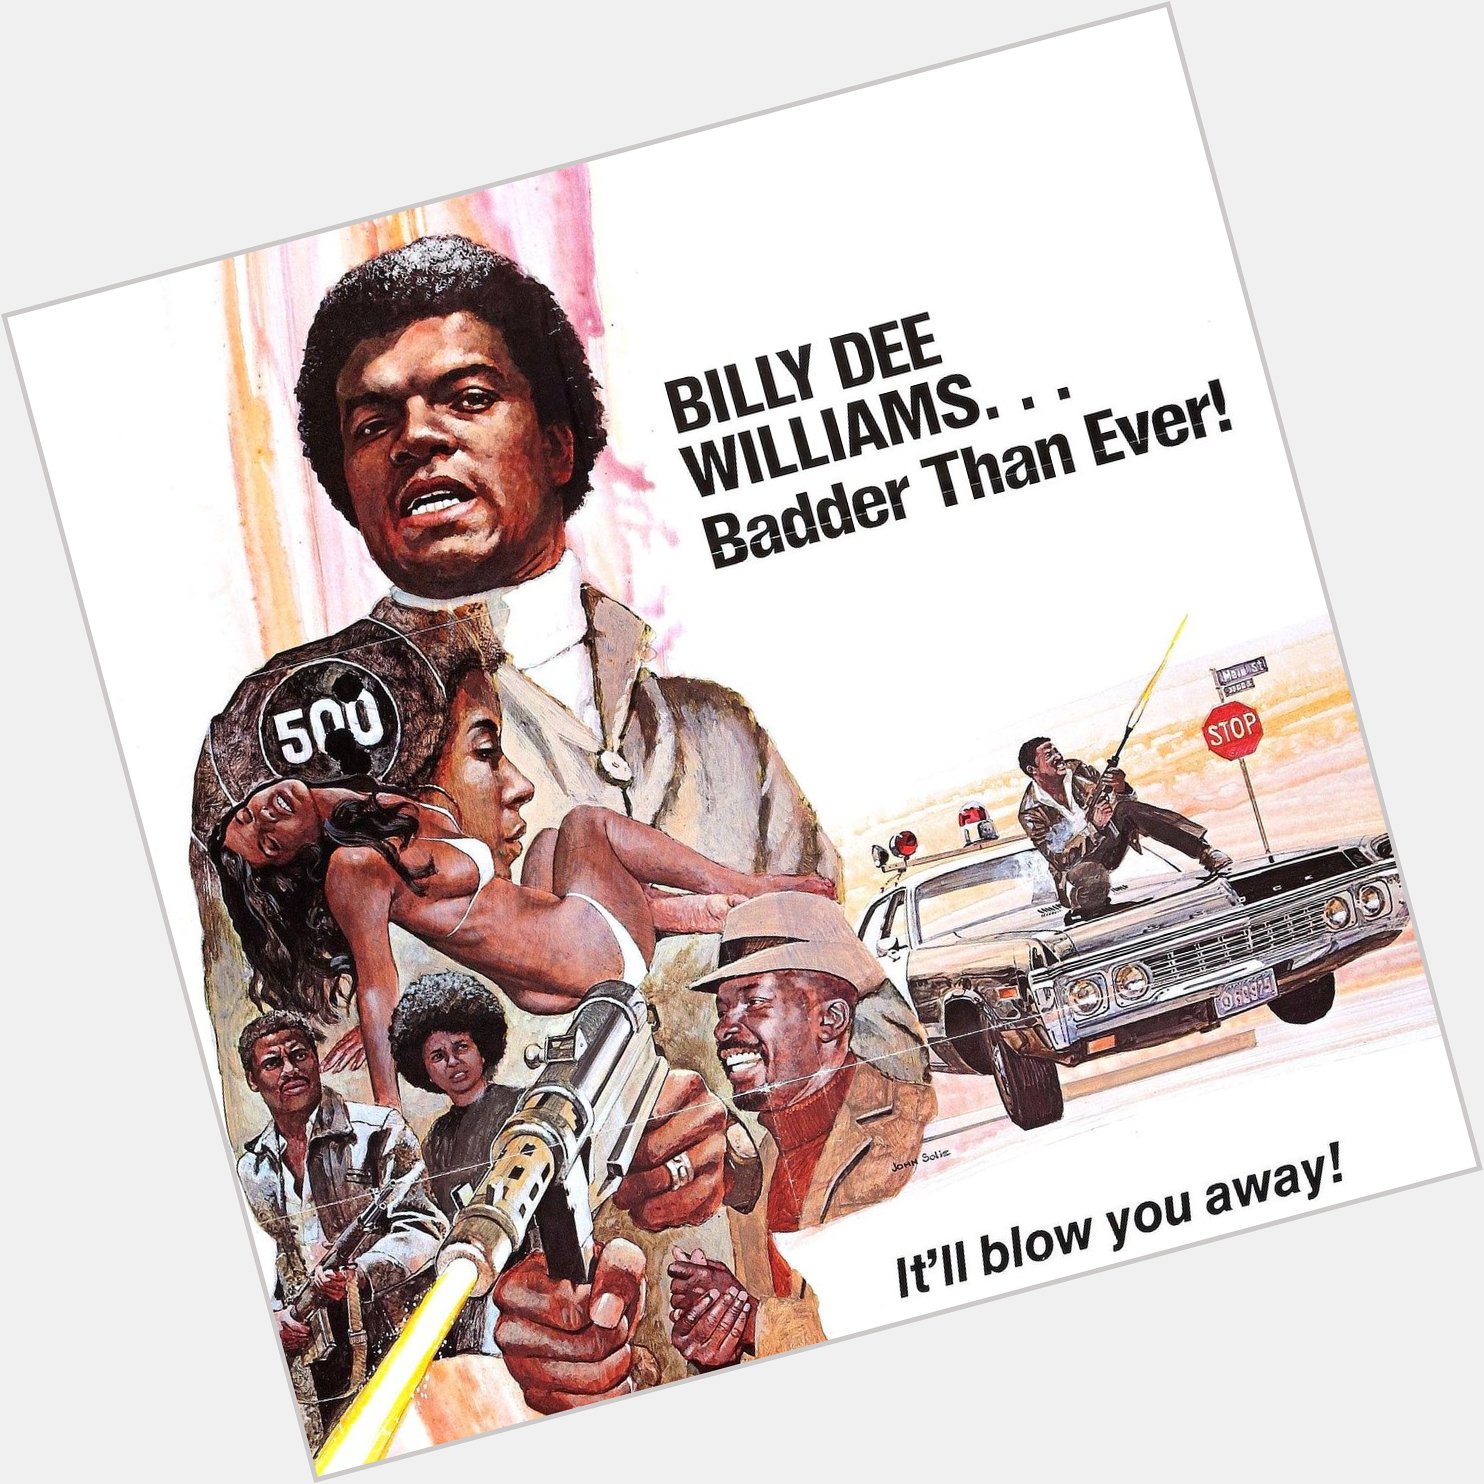 Happy birthday, Billy Dee Williams! 